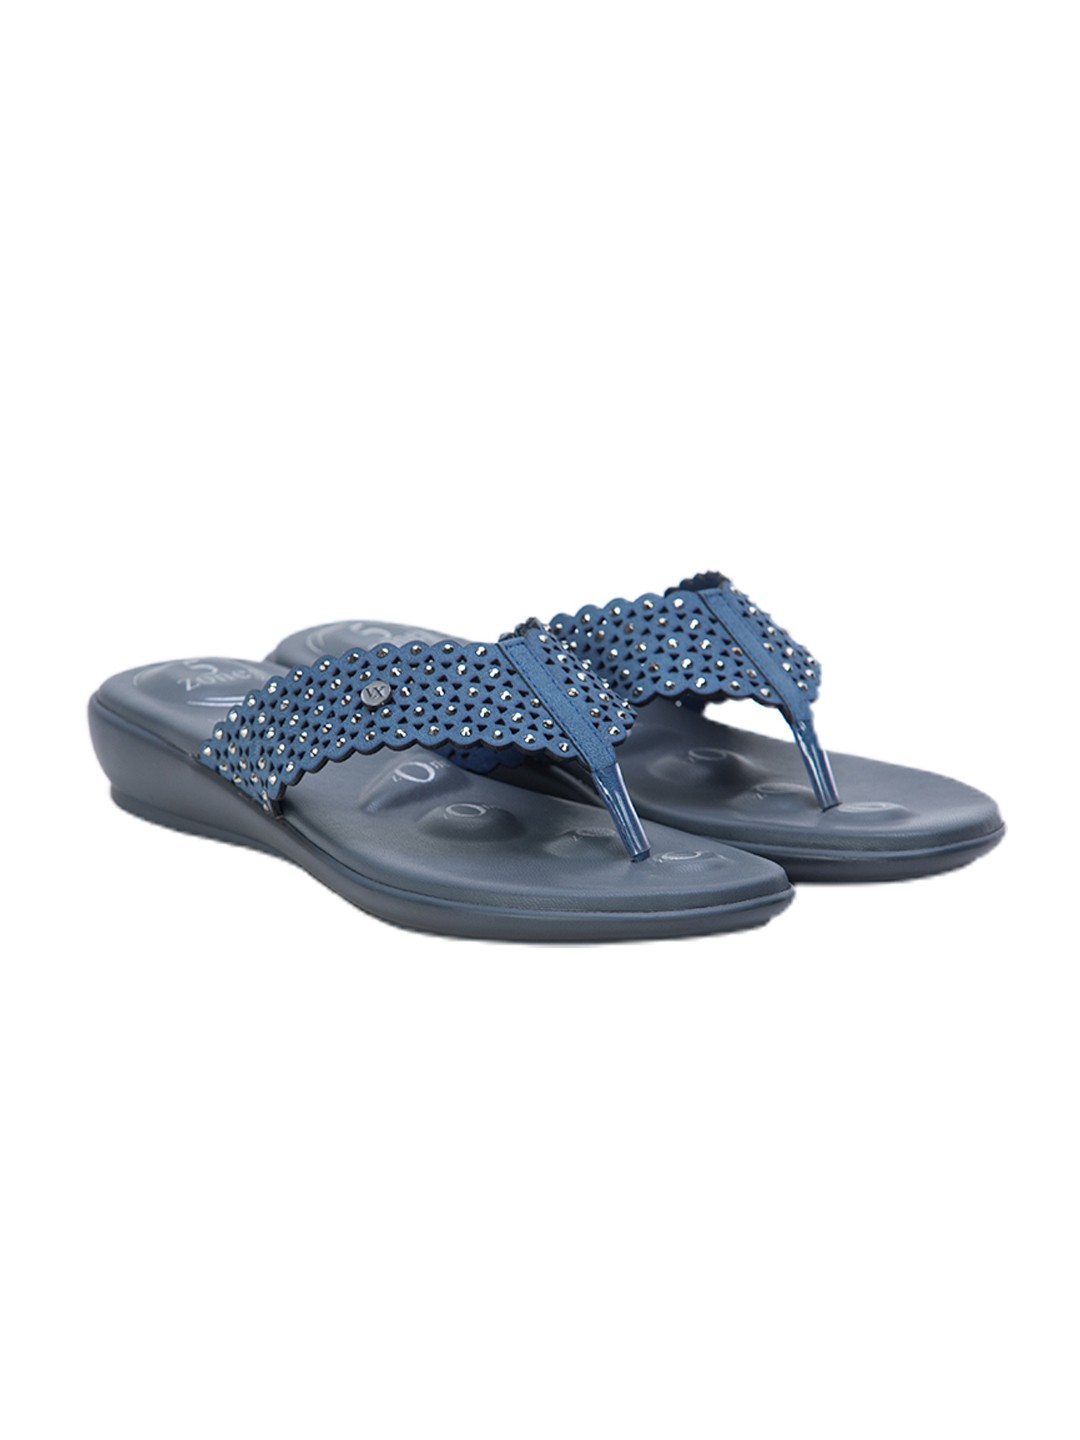 Buy Von Wellx Germany Comfort Gleam Blue Slippers Online in Ghaziabad